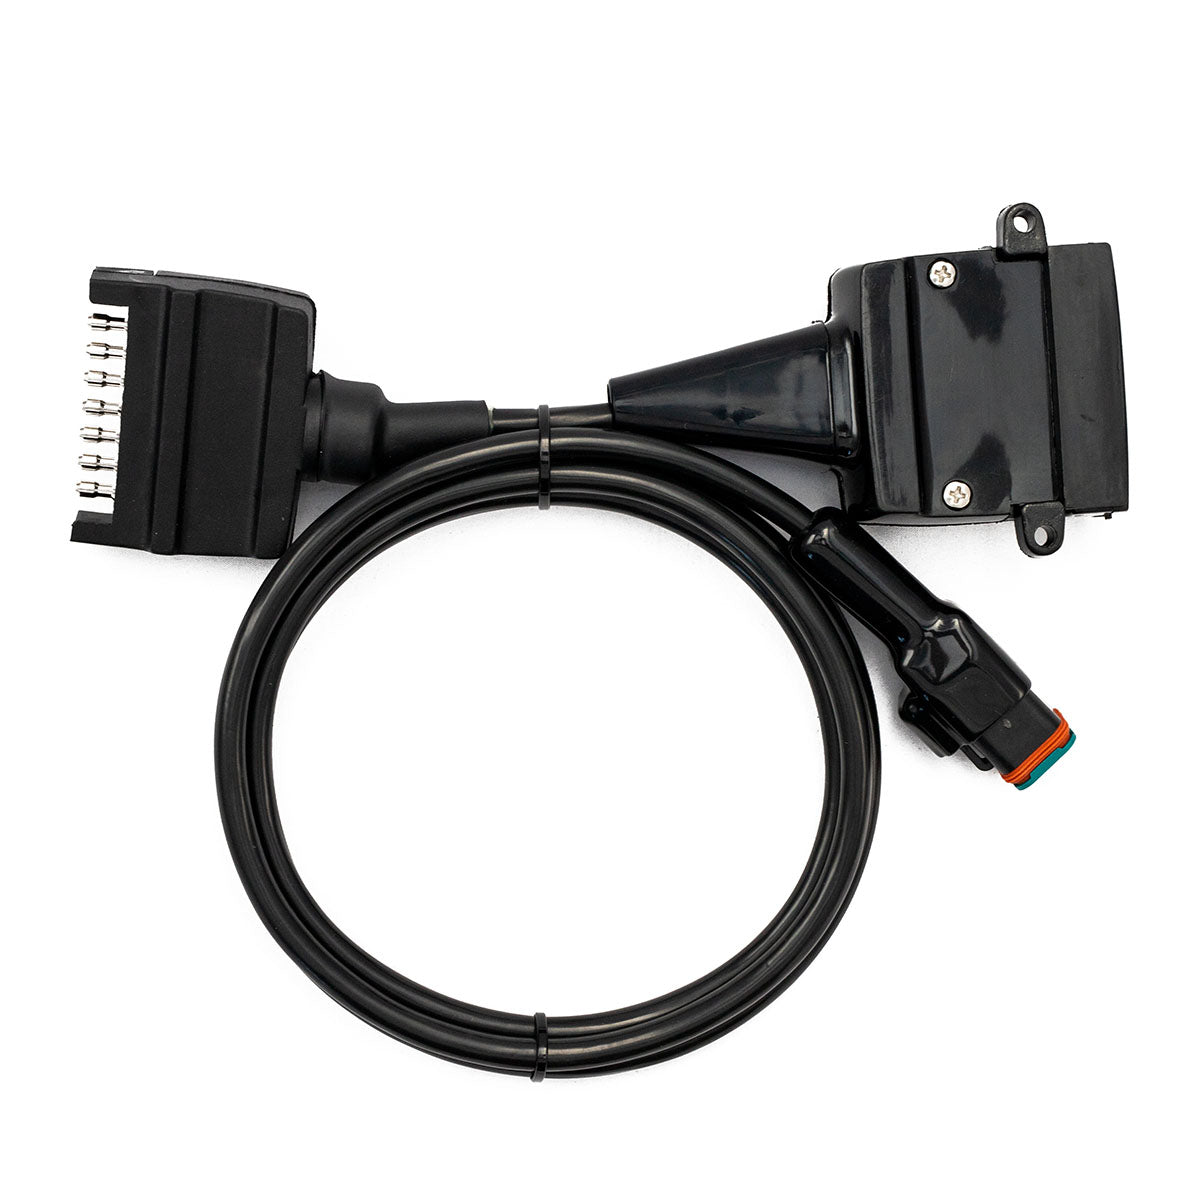 Elecbrakes Plug & Play Adaptor A7-12